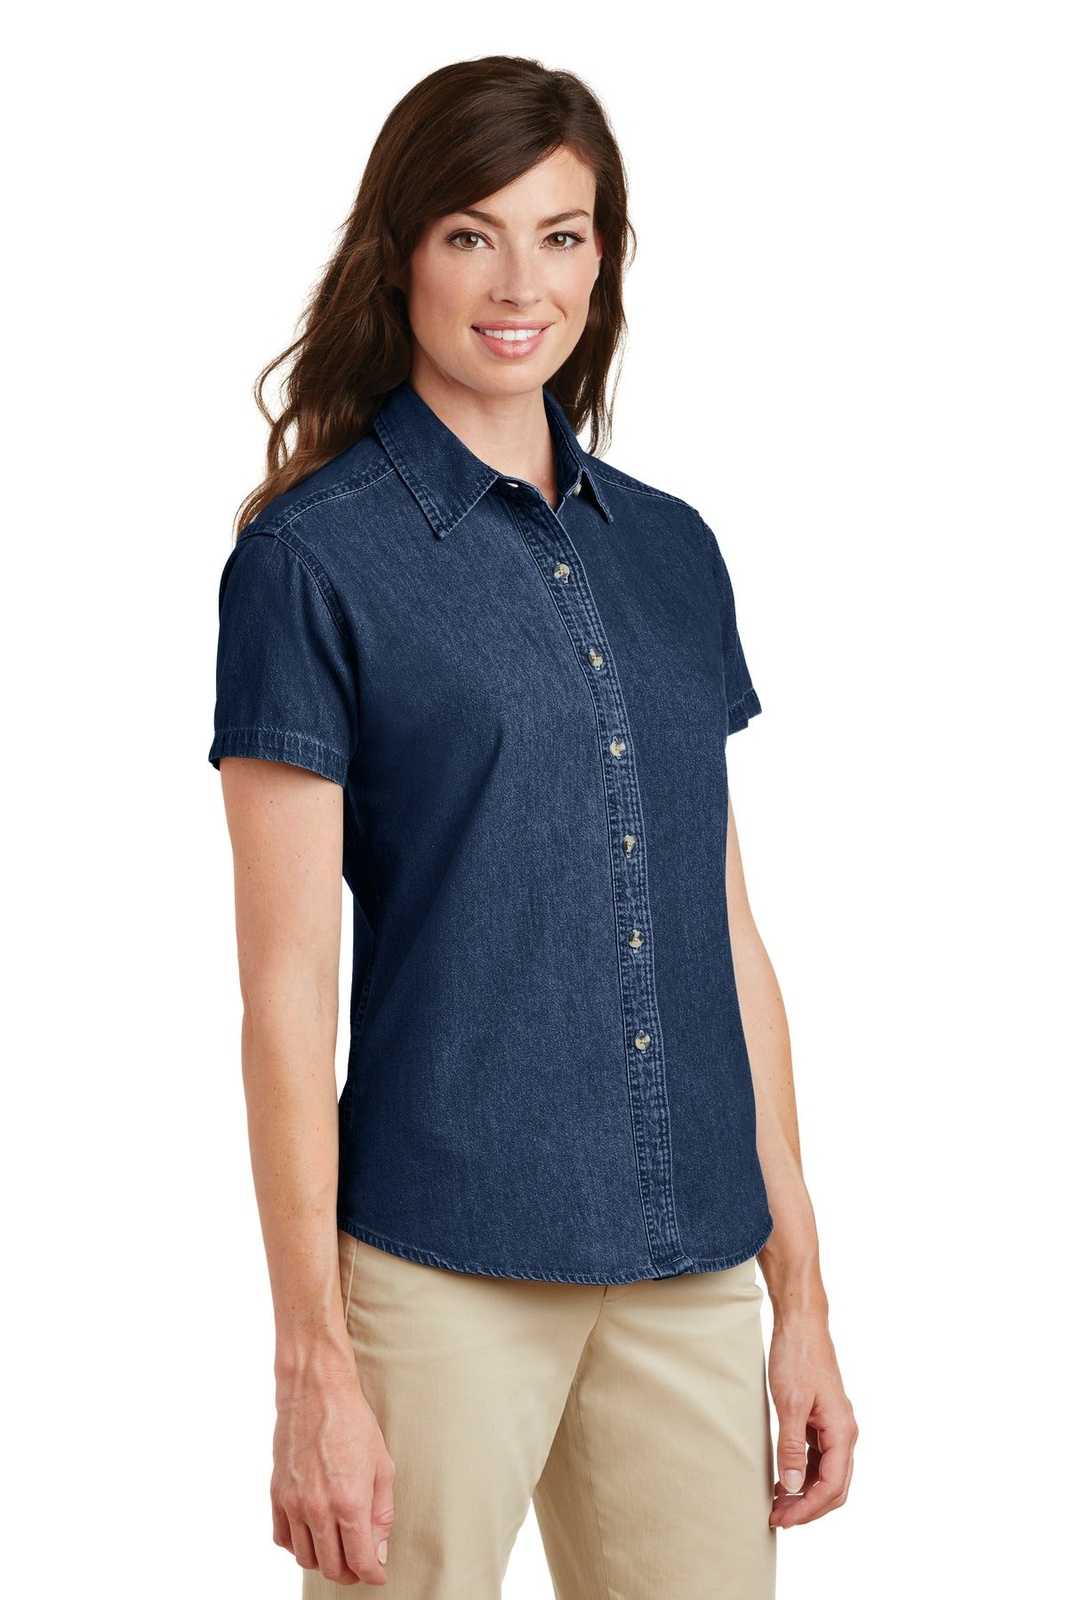 Port &amp; Company LSP11 Ladies Short Sleeve Value Denim Shirt - Ink Blue - HIT a Double - 4